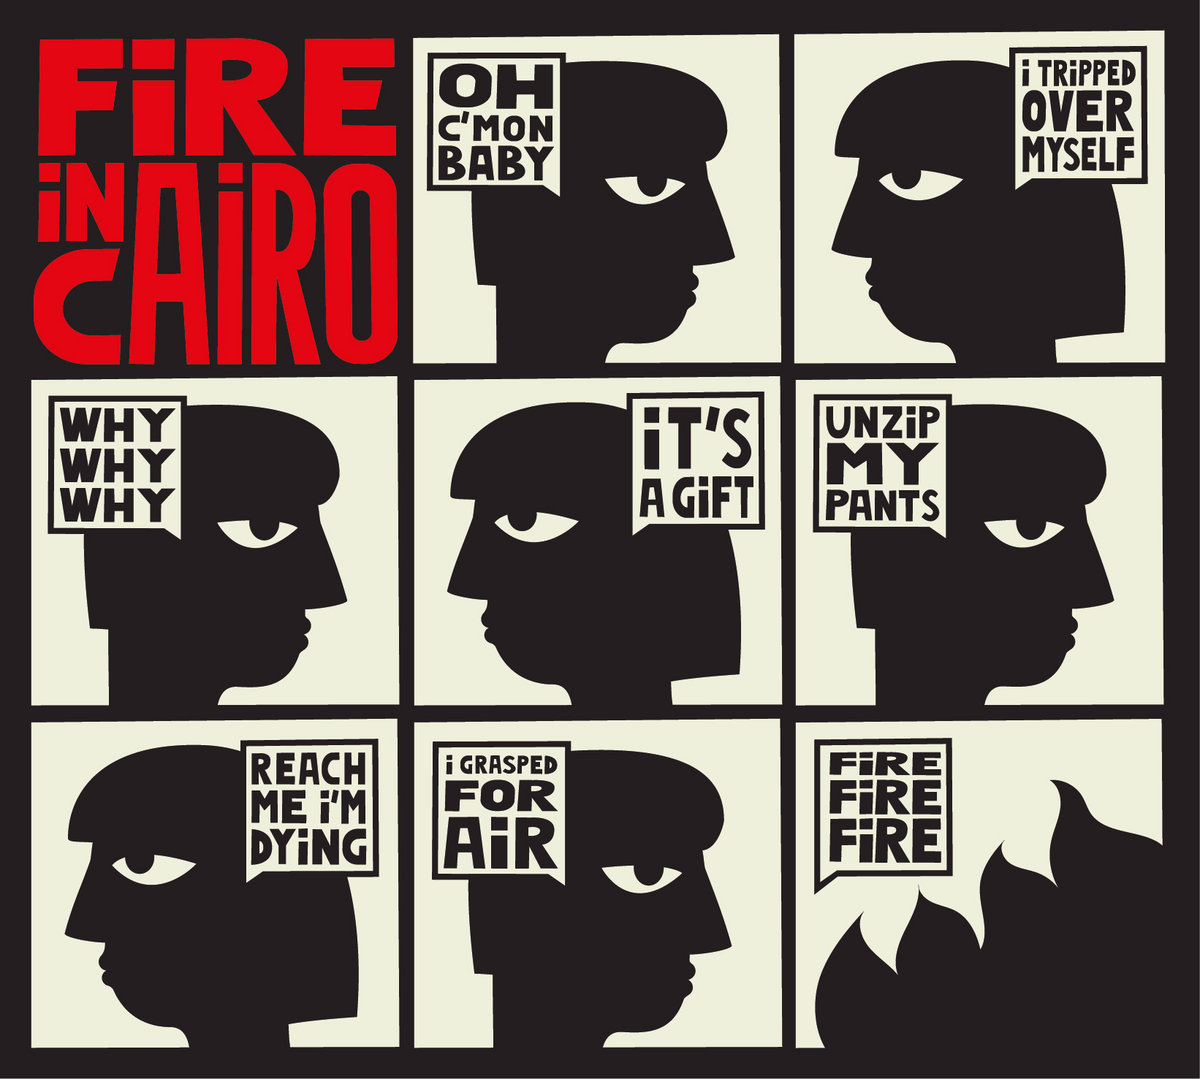 Fire in Cairo - Fire in Cairo